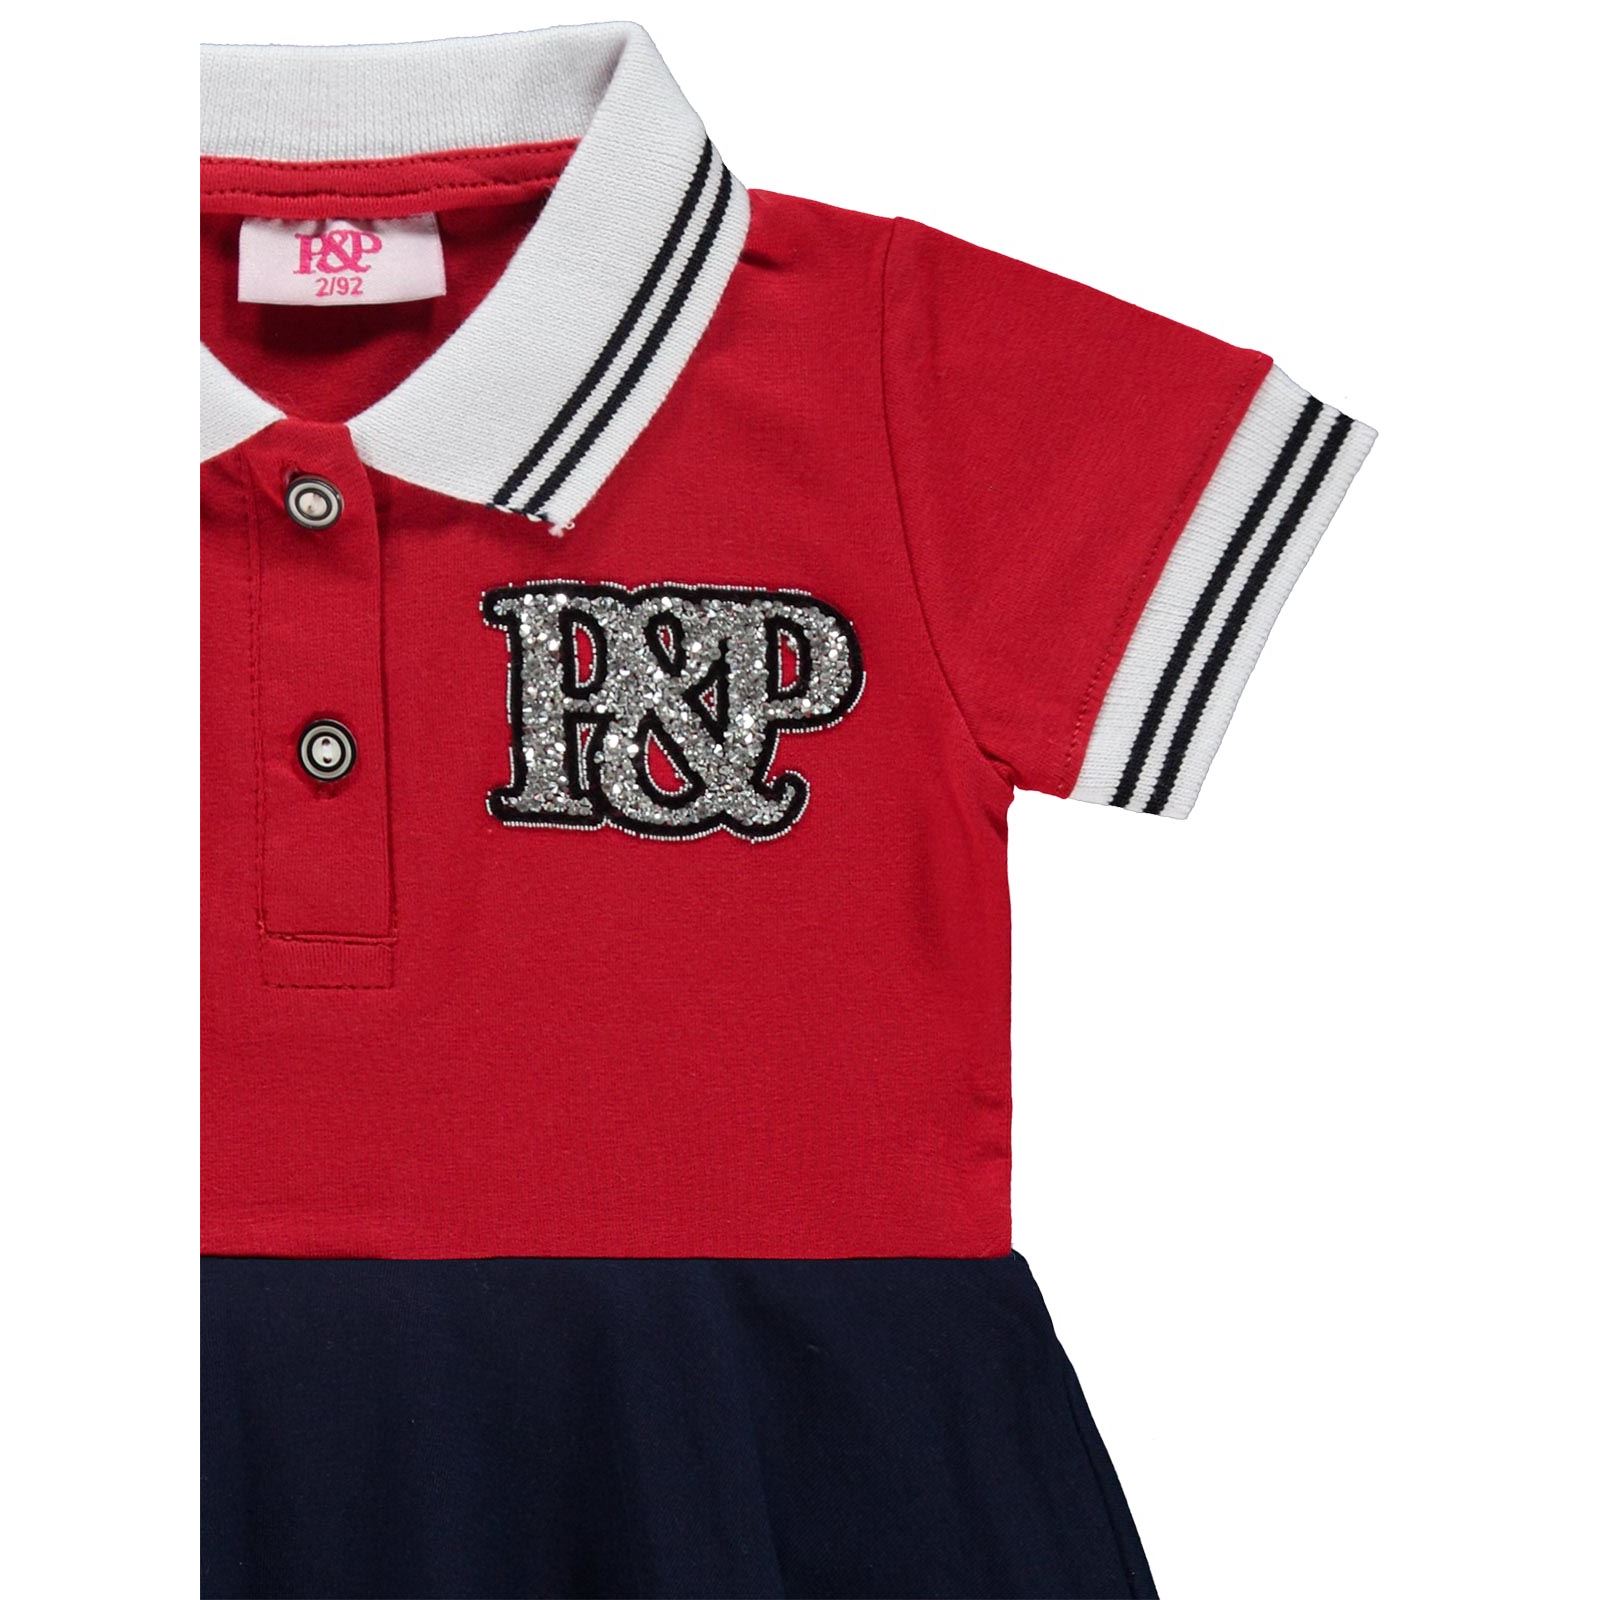 P&P Kız Çocuk Elbise 2-5 Yaş Kırmızı